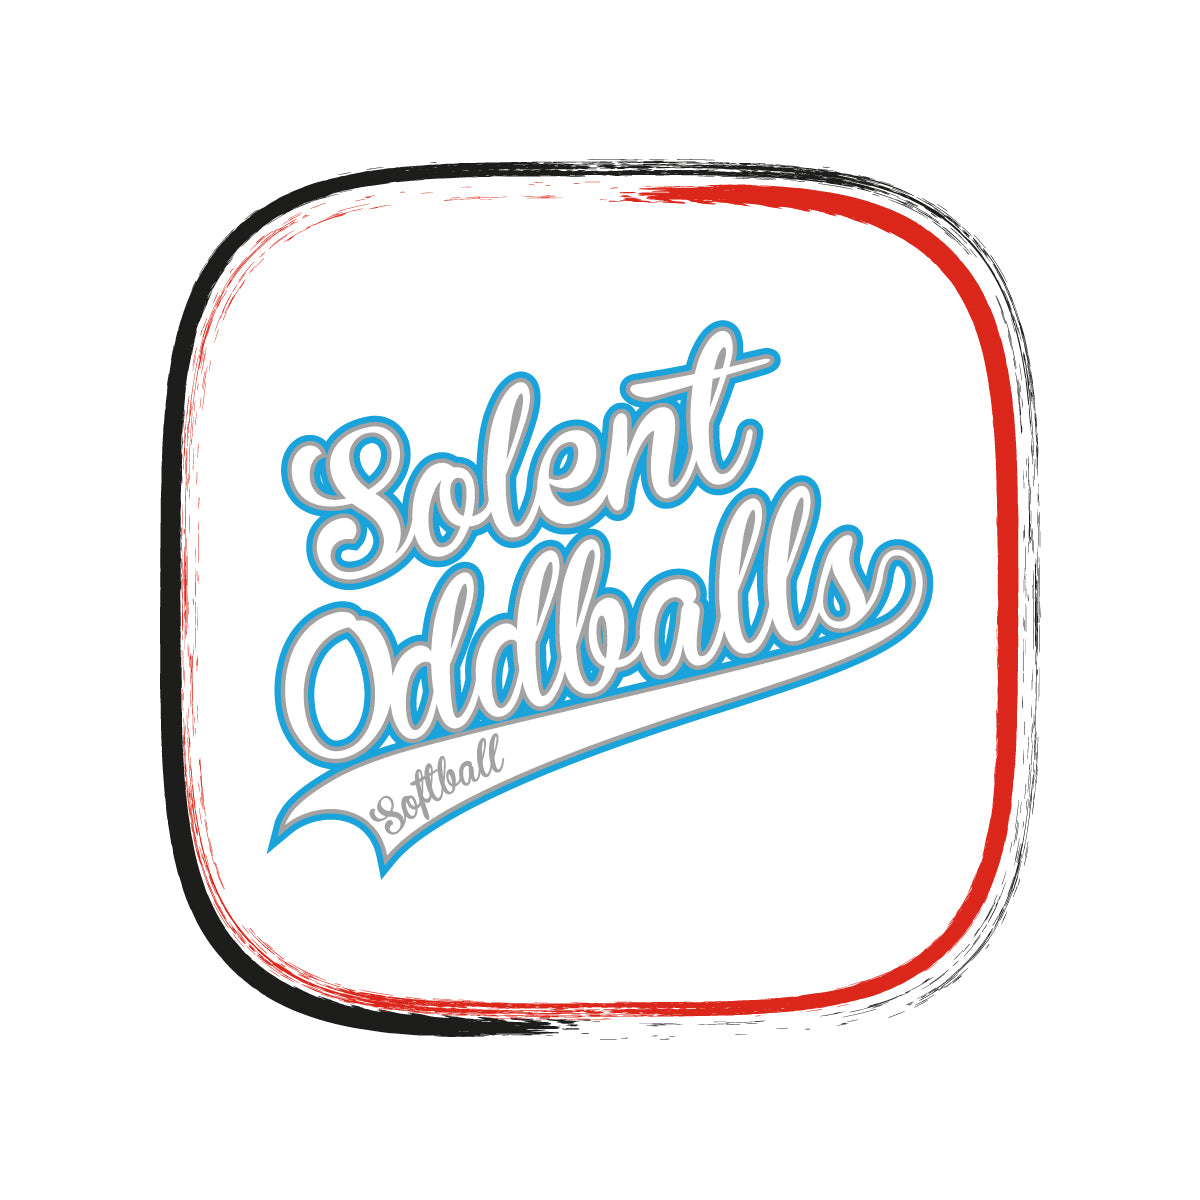 Solent Oddballs Softball